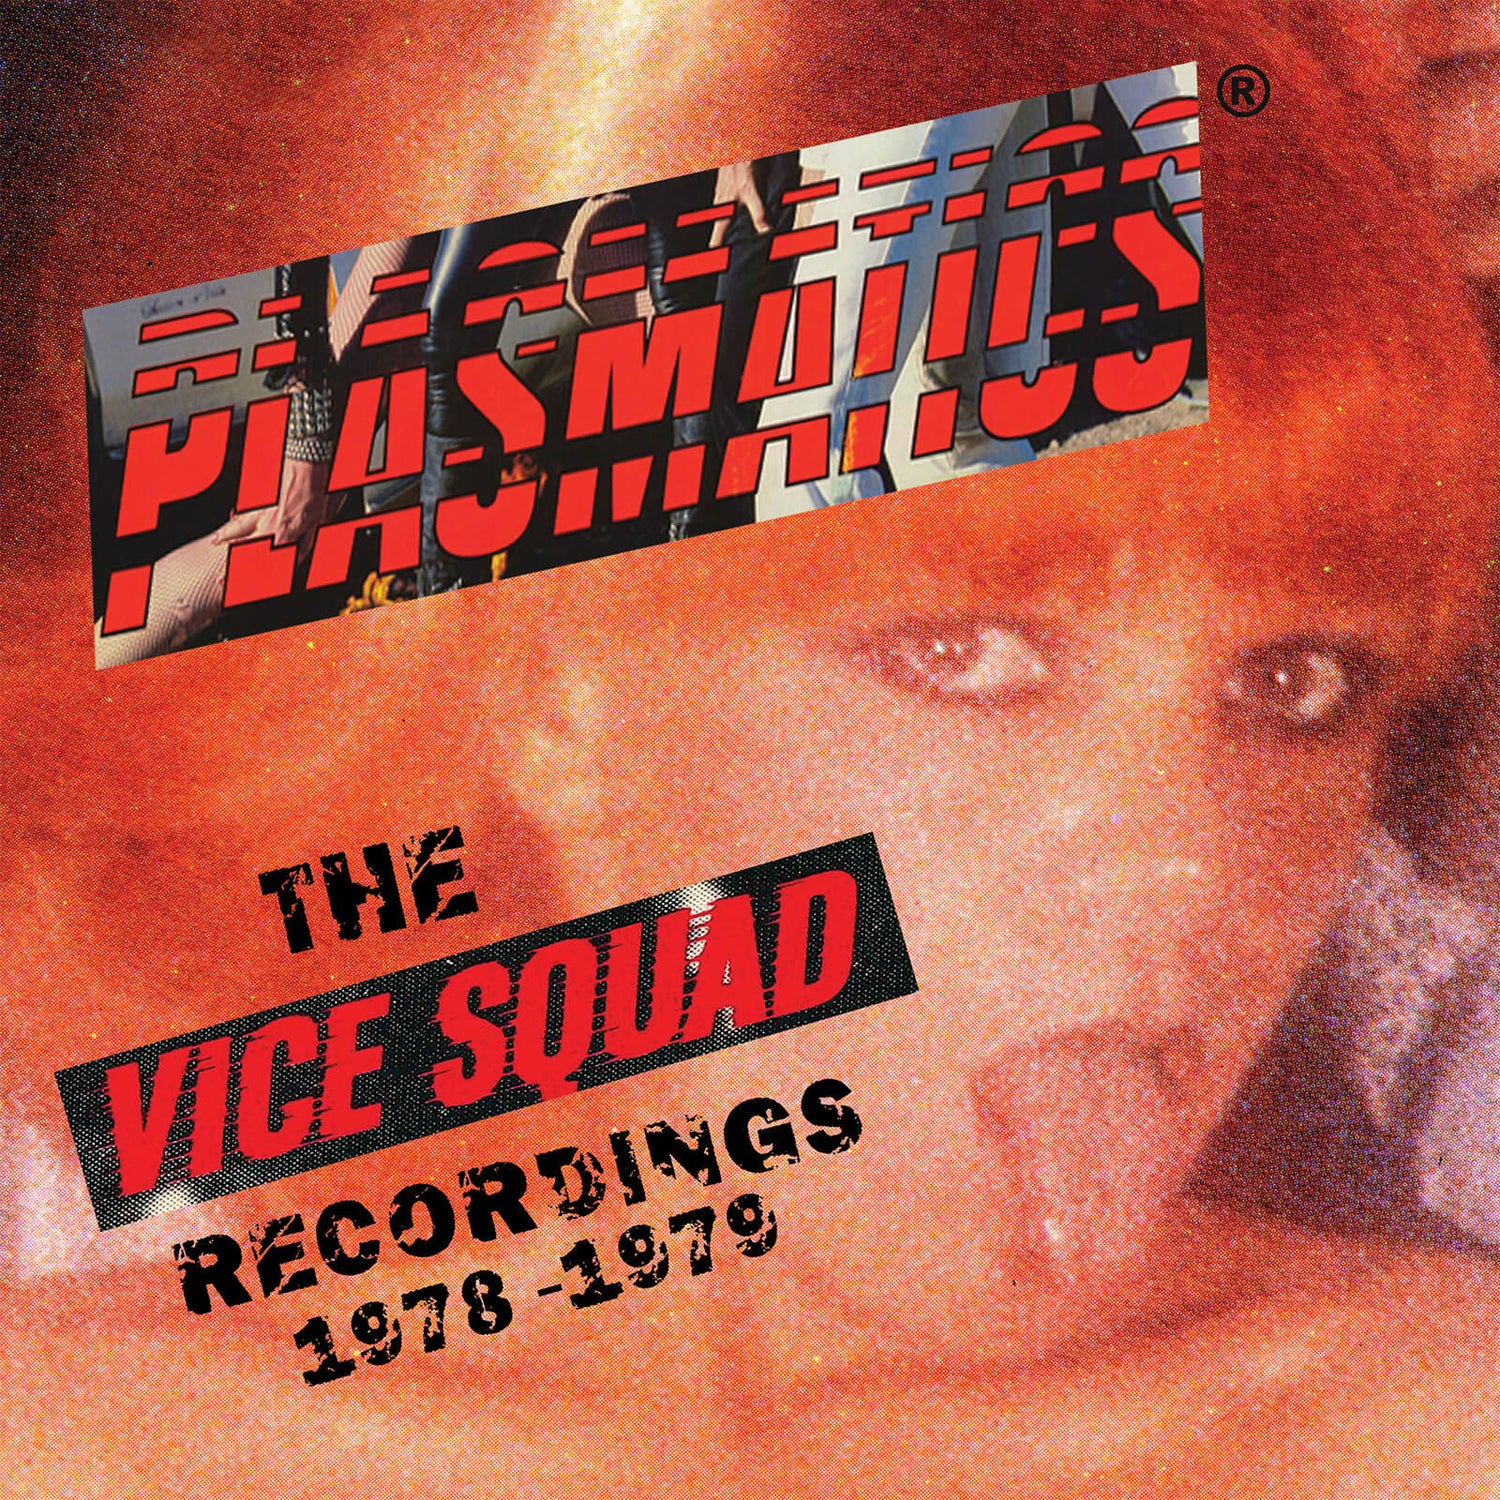 Plasmatics - The Vice Squad Records Recordings Vinyl